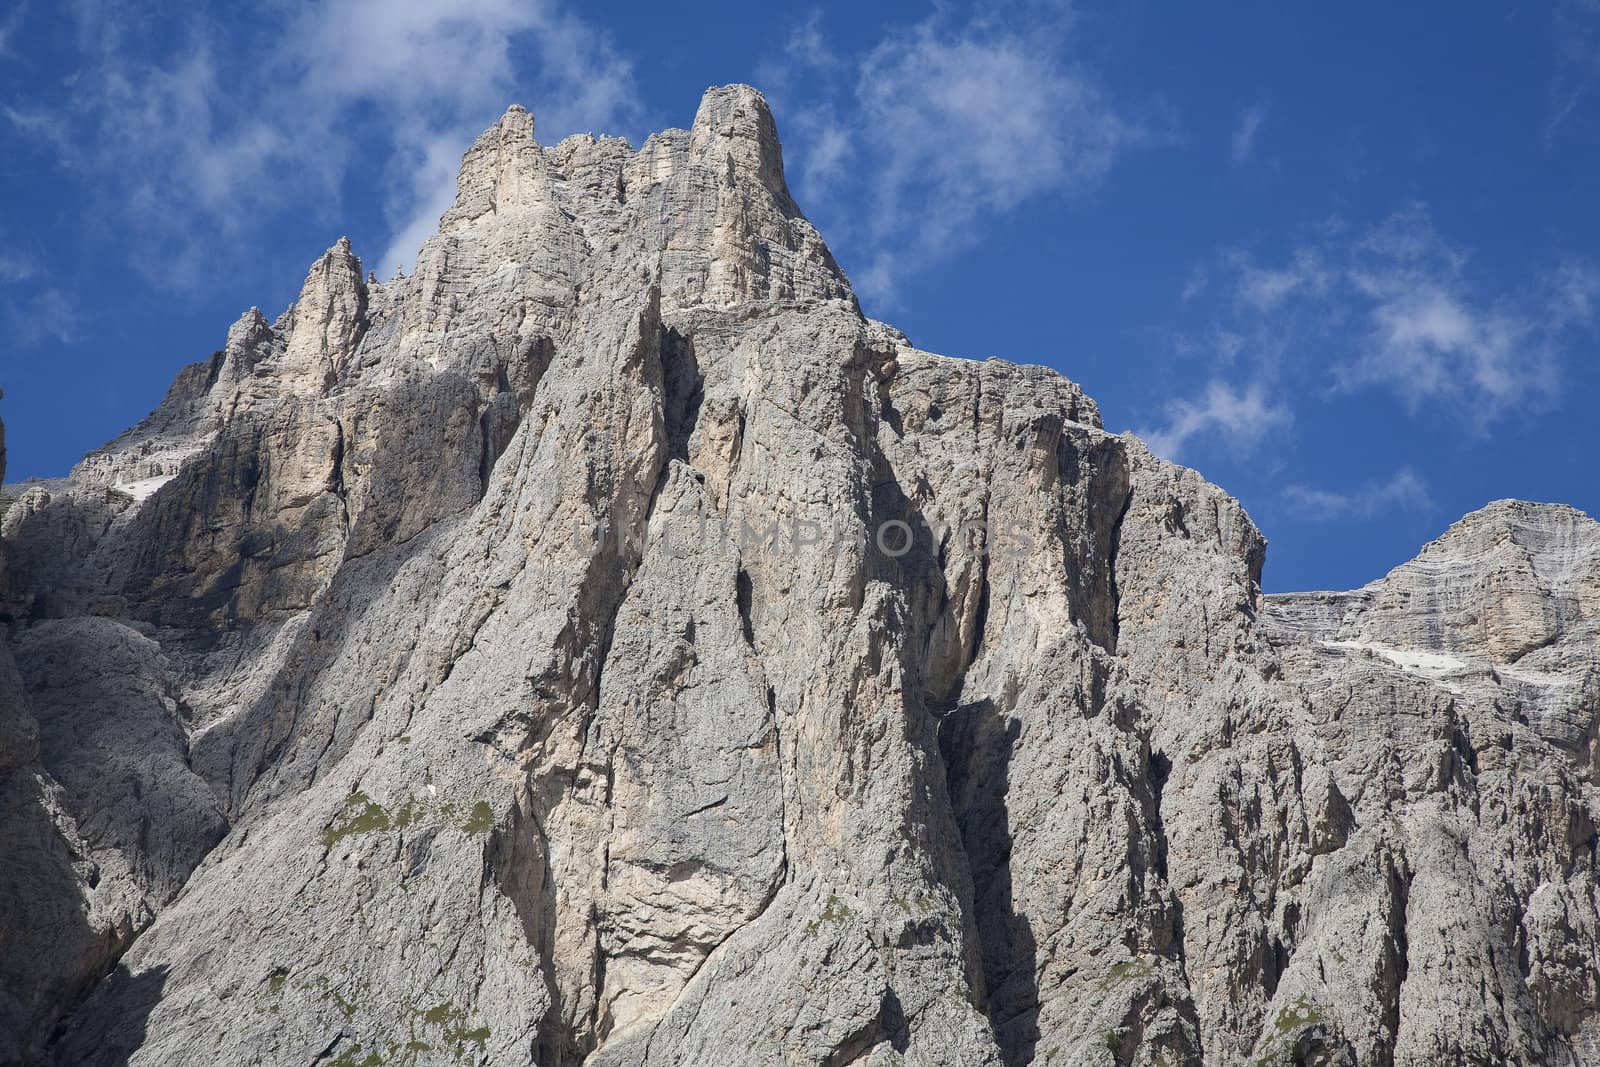 Barren peaks of the mountain range the Dolomites - Italy.